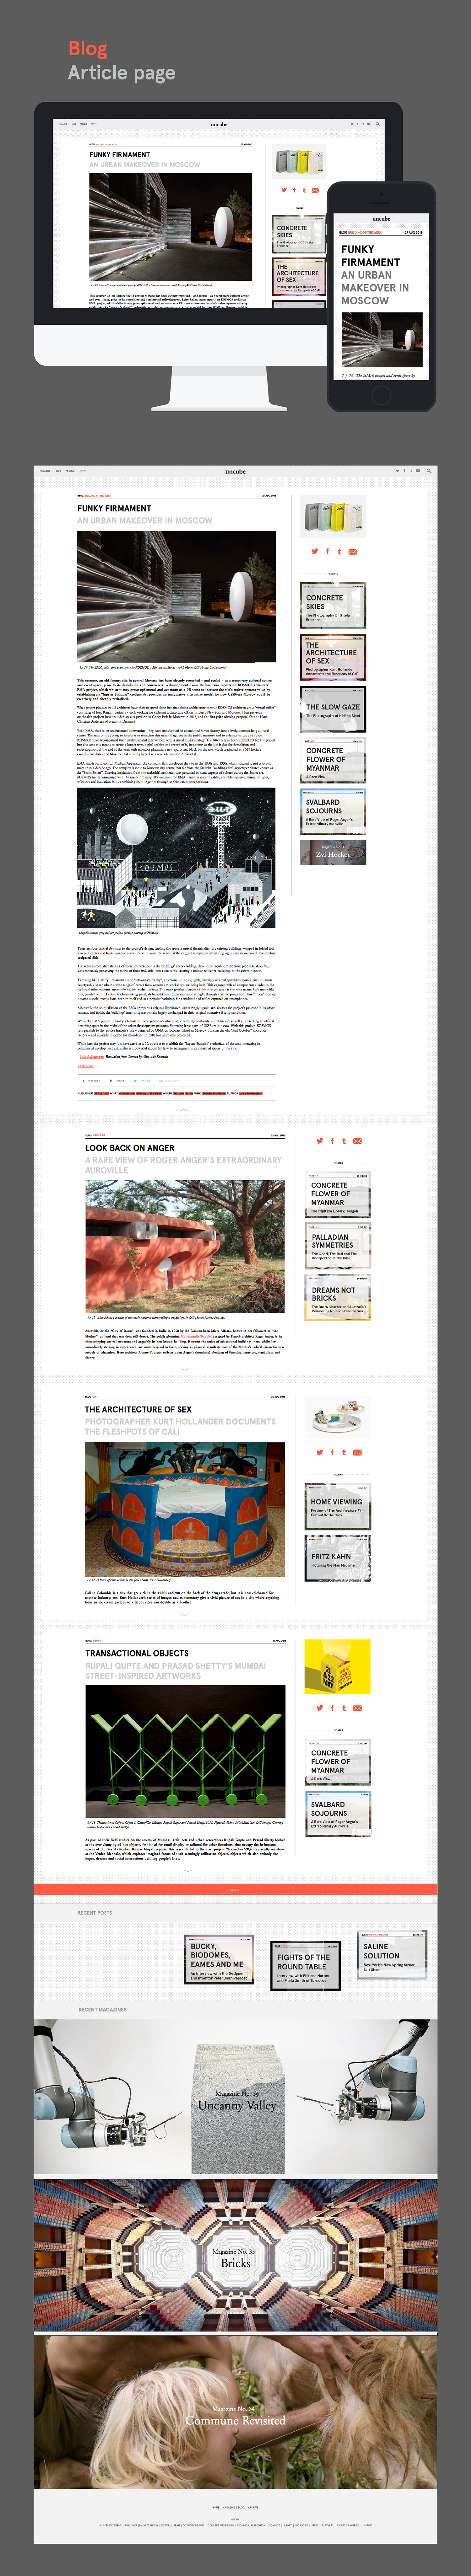 uncube magazine Blog architecture redesign